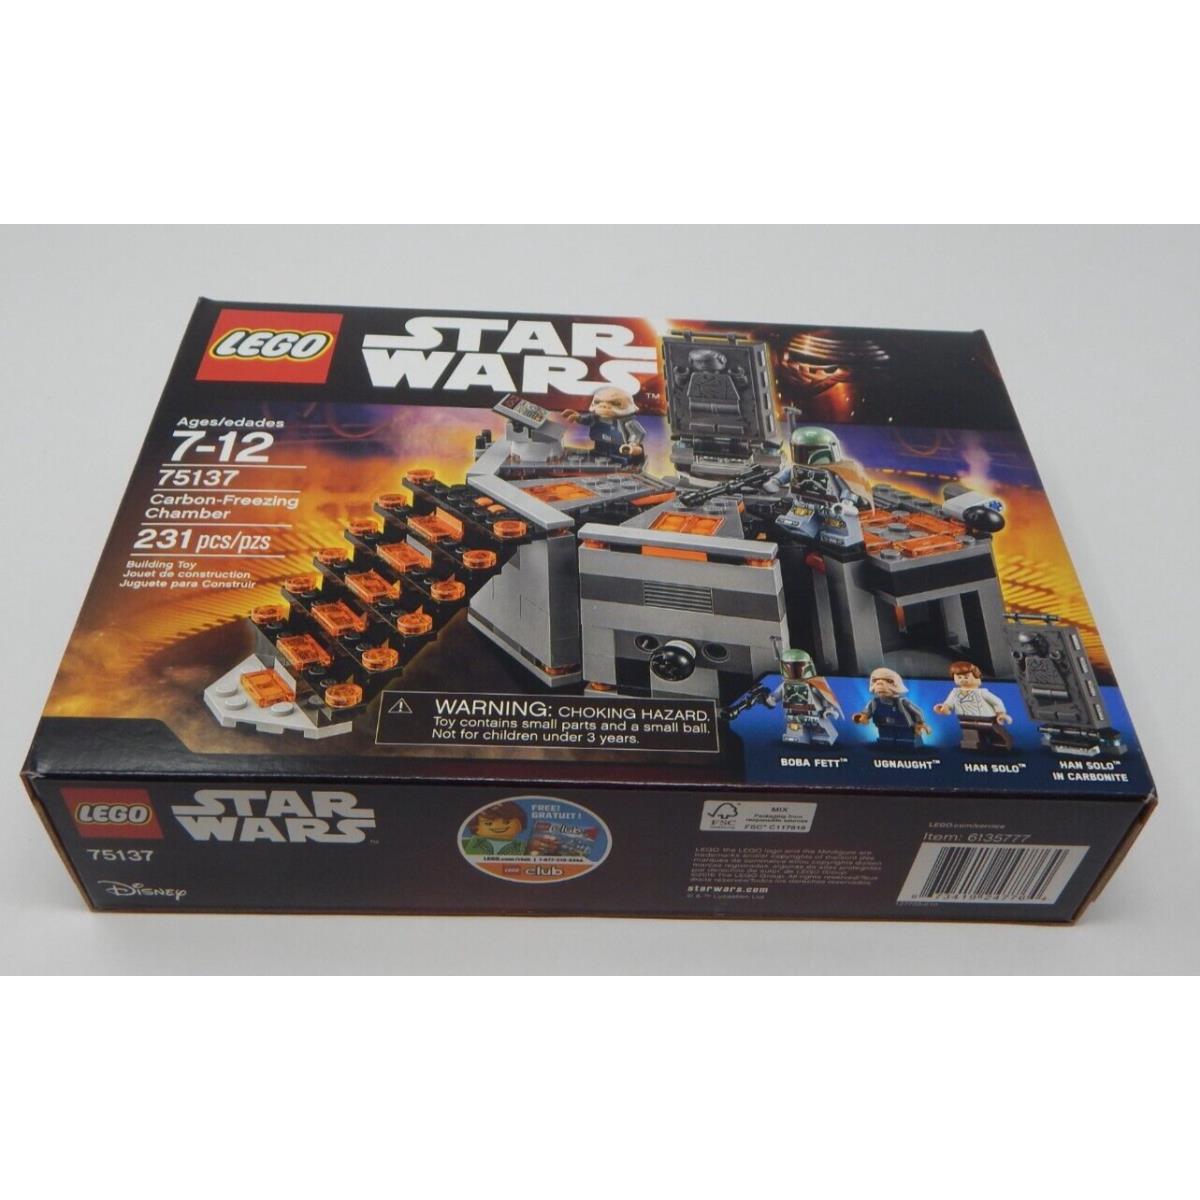 Lego Star Wars 75137 Carbon-freezing Chamber Set 2016